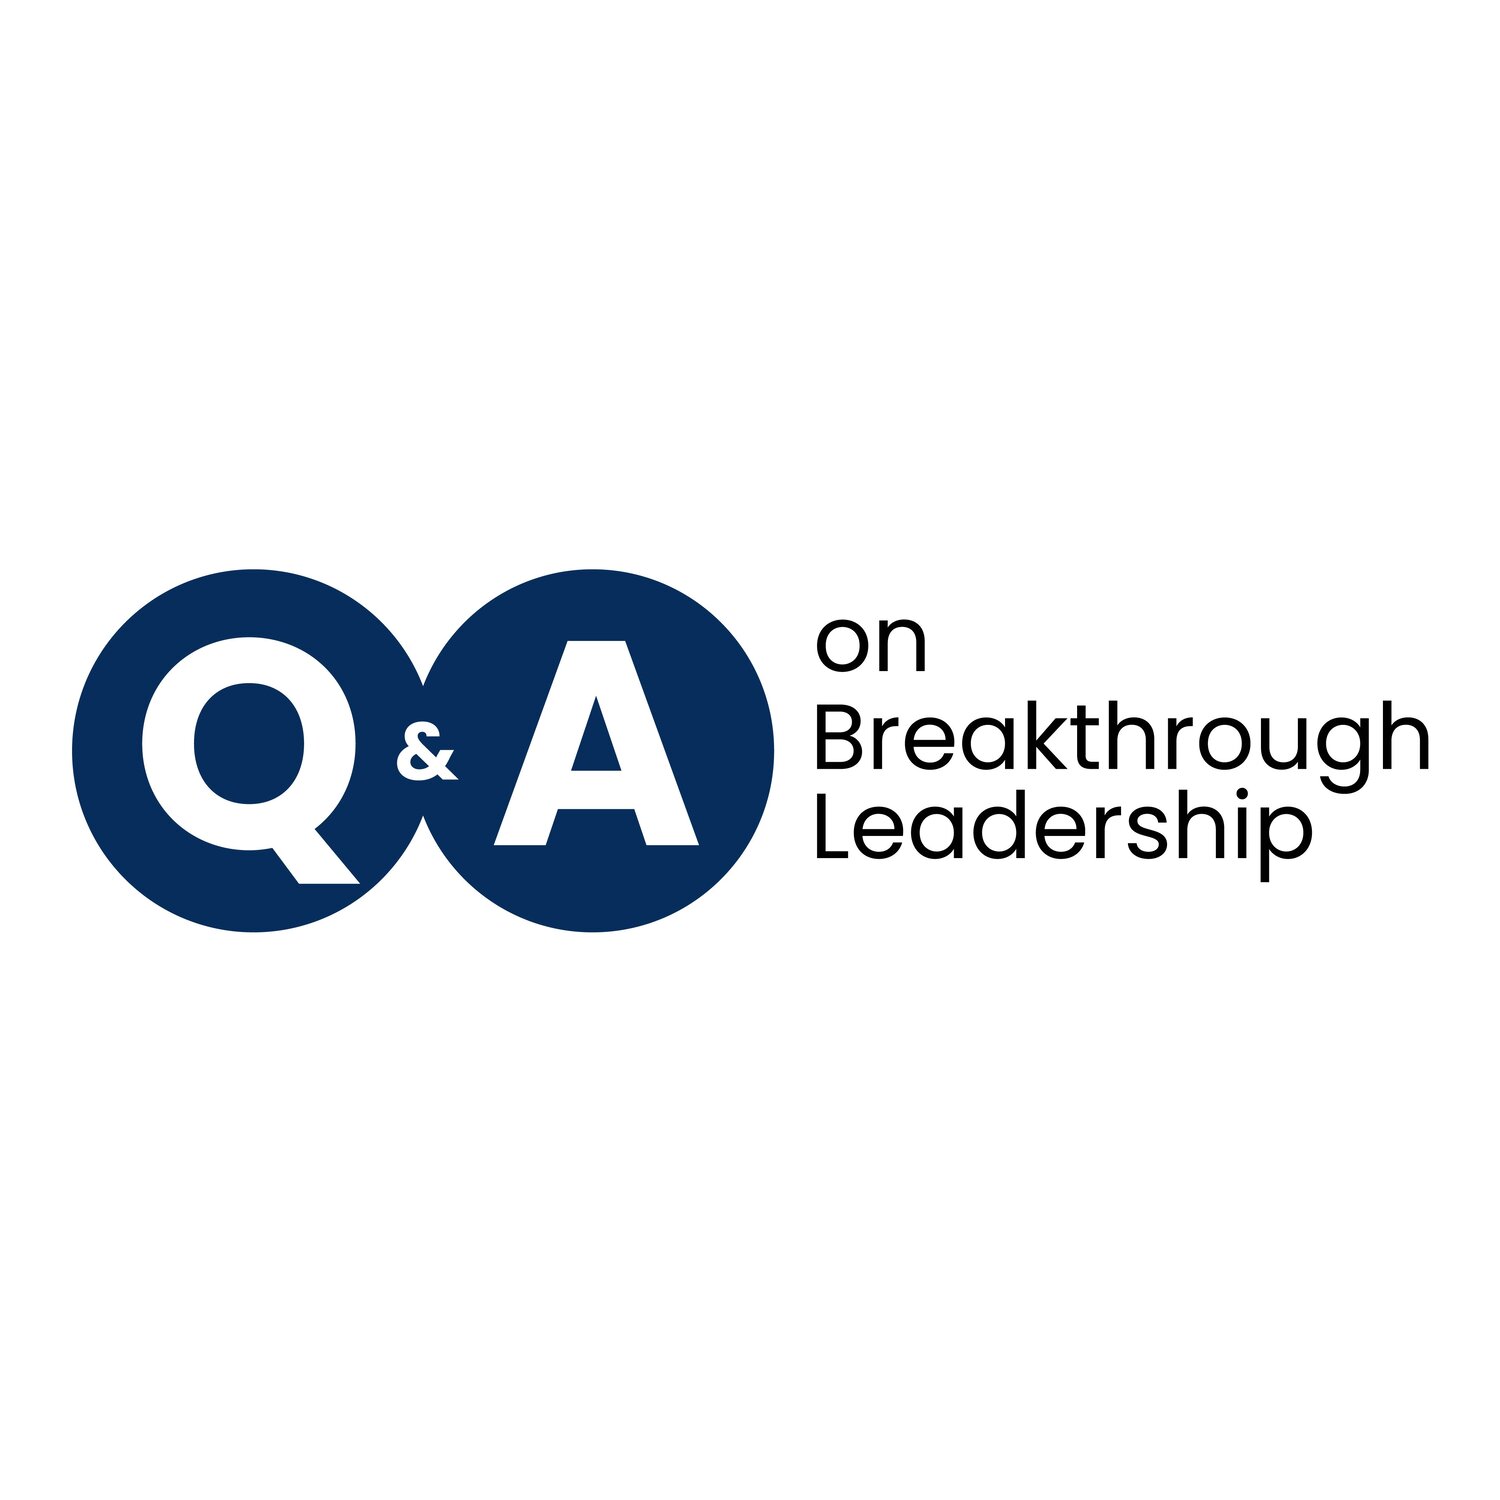 Q & A on Breakthrough Leadership